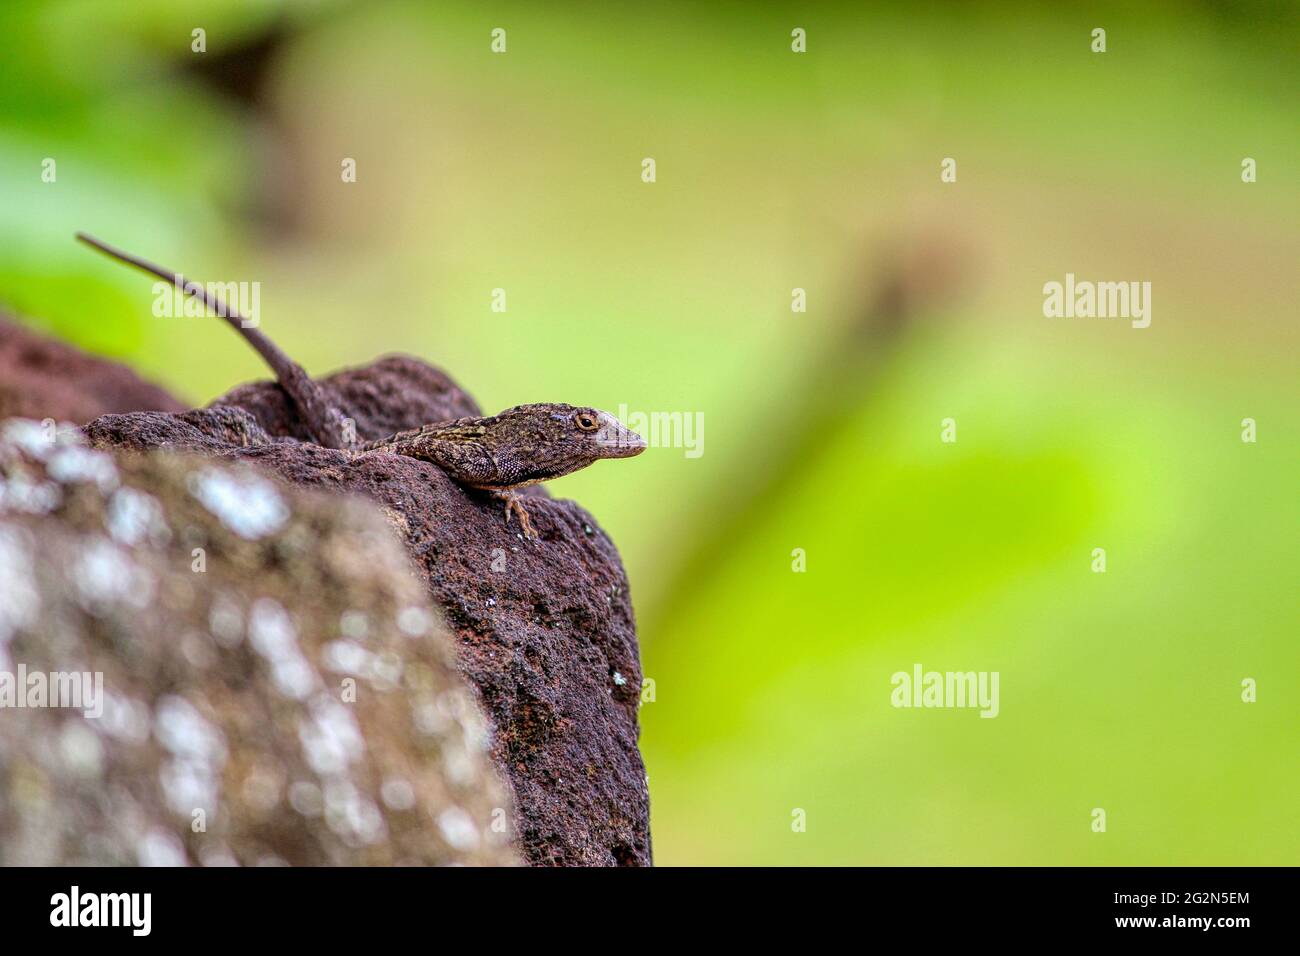 Gecko camouflage - hiding amongst the rockery Stock Photo